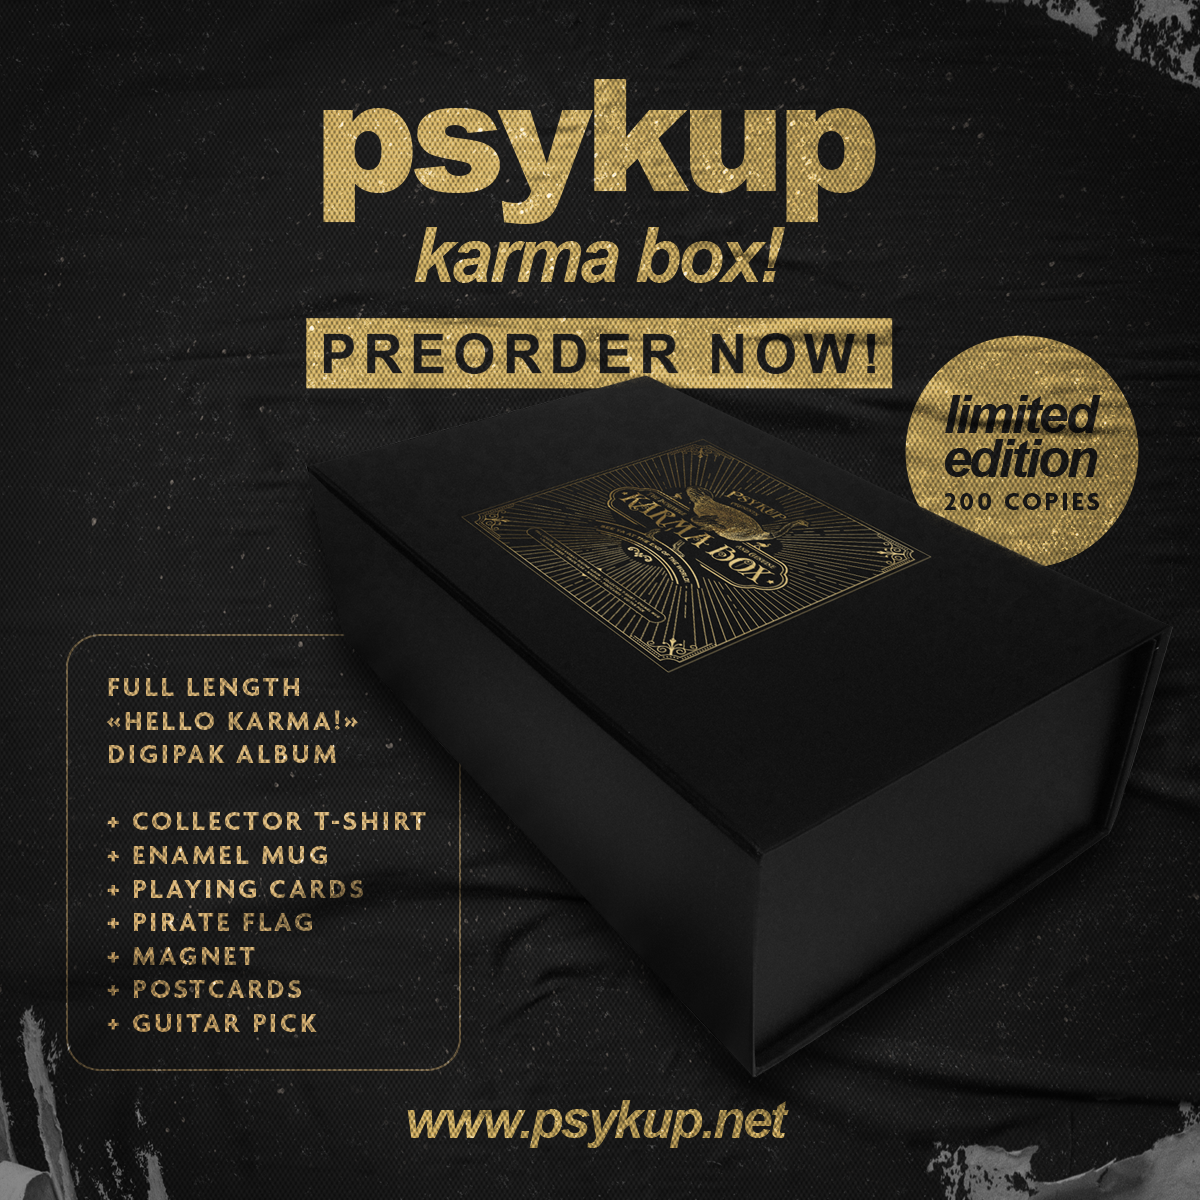 PSYKUP - "Karma Box !" - Limited Edition